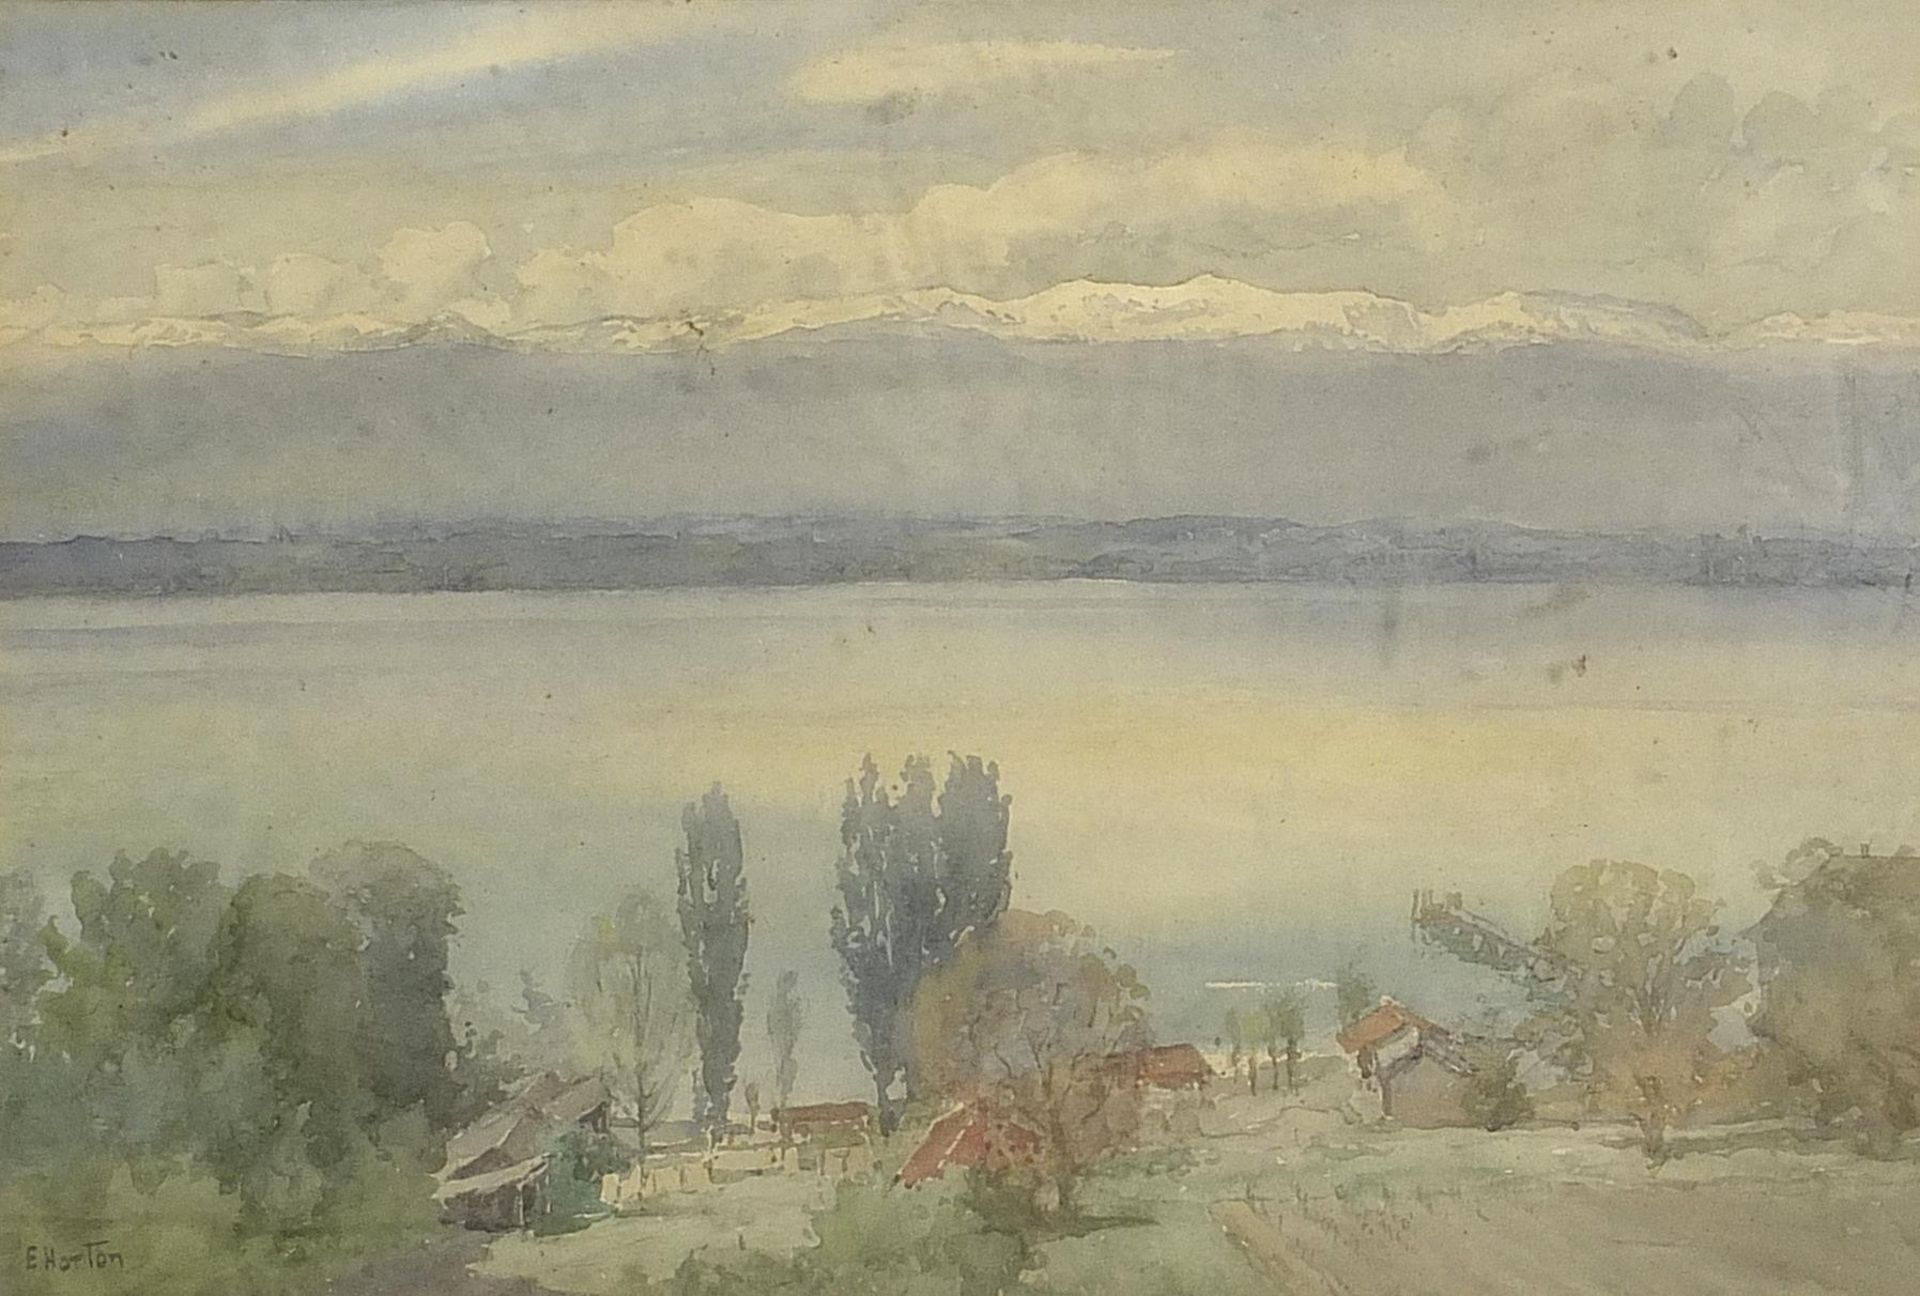 E Horton - The Juras, Lake Geneva, watercolour, inscribed verso, mounted, framed and glazed, 53cm